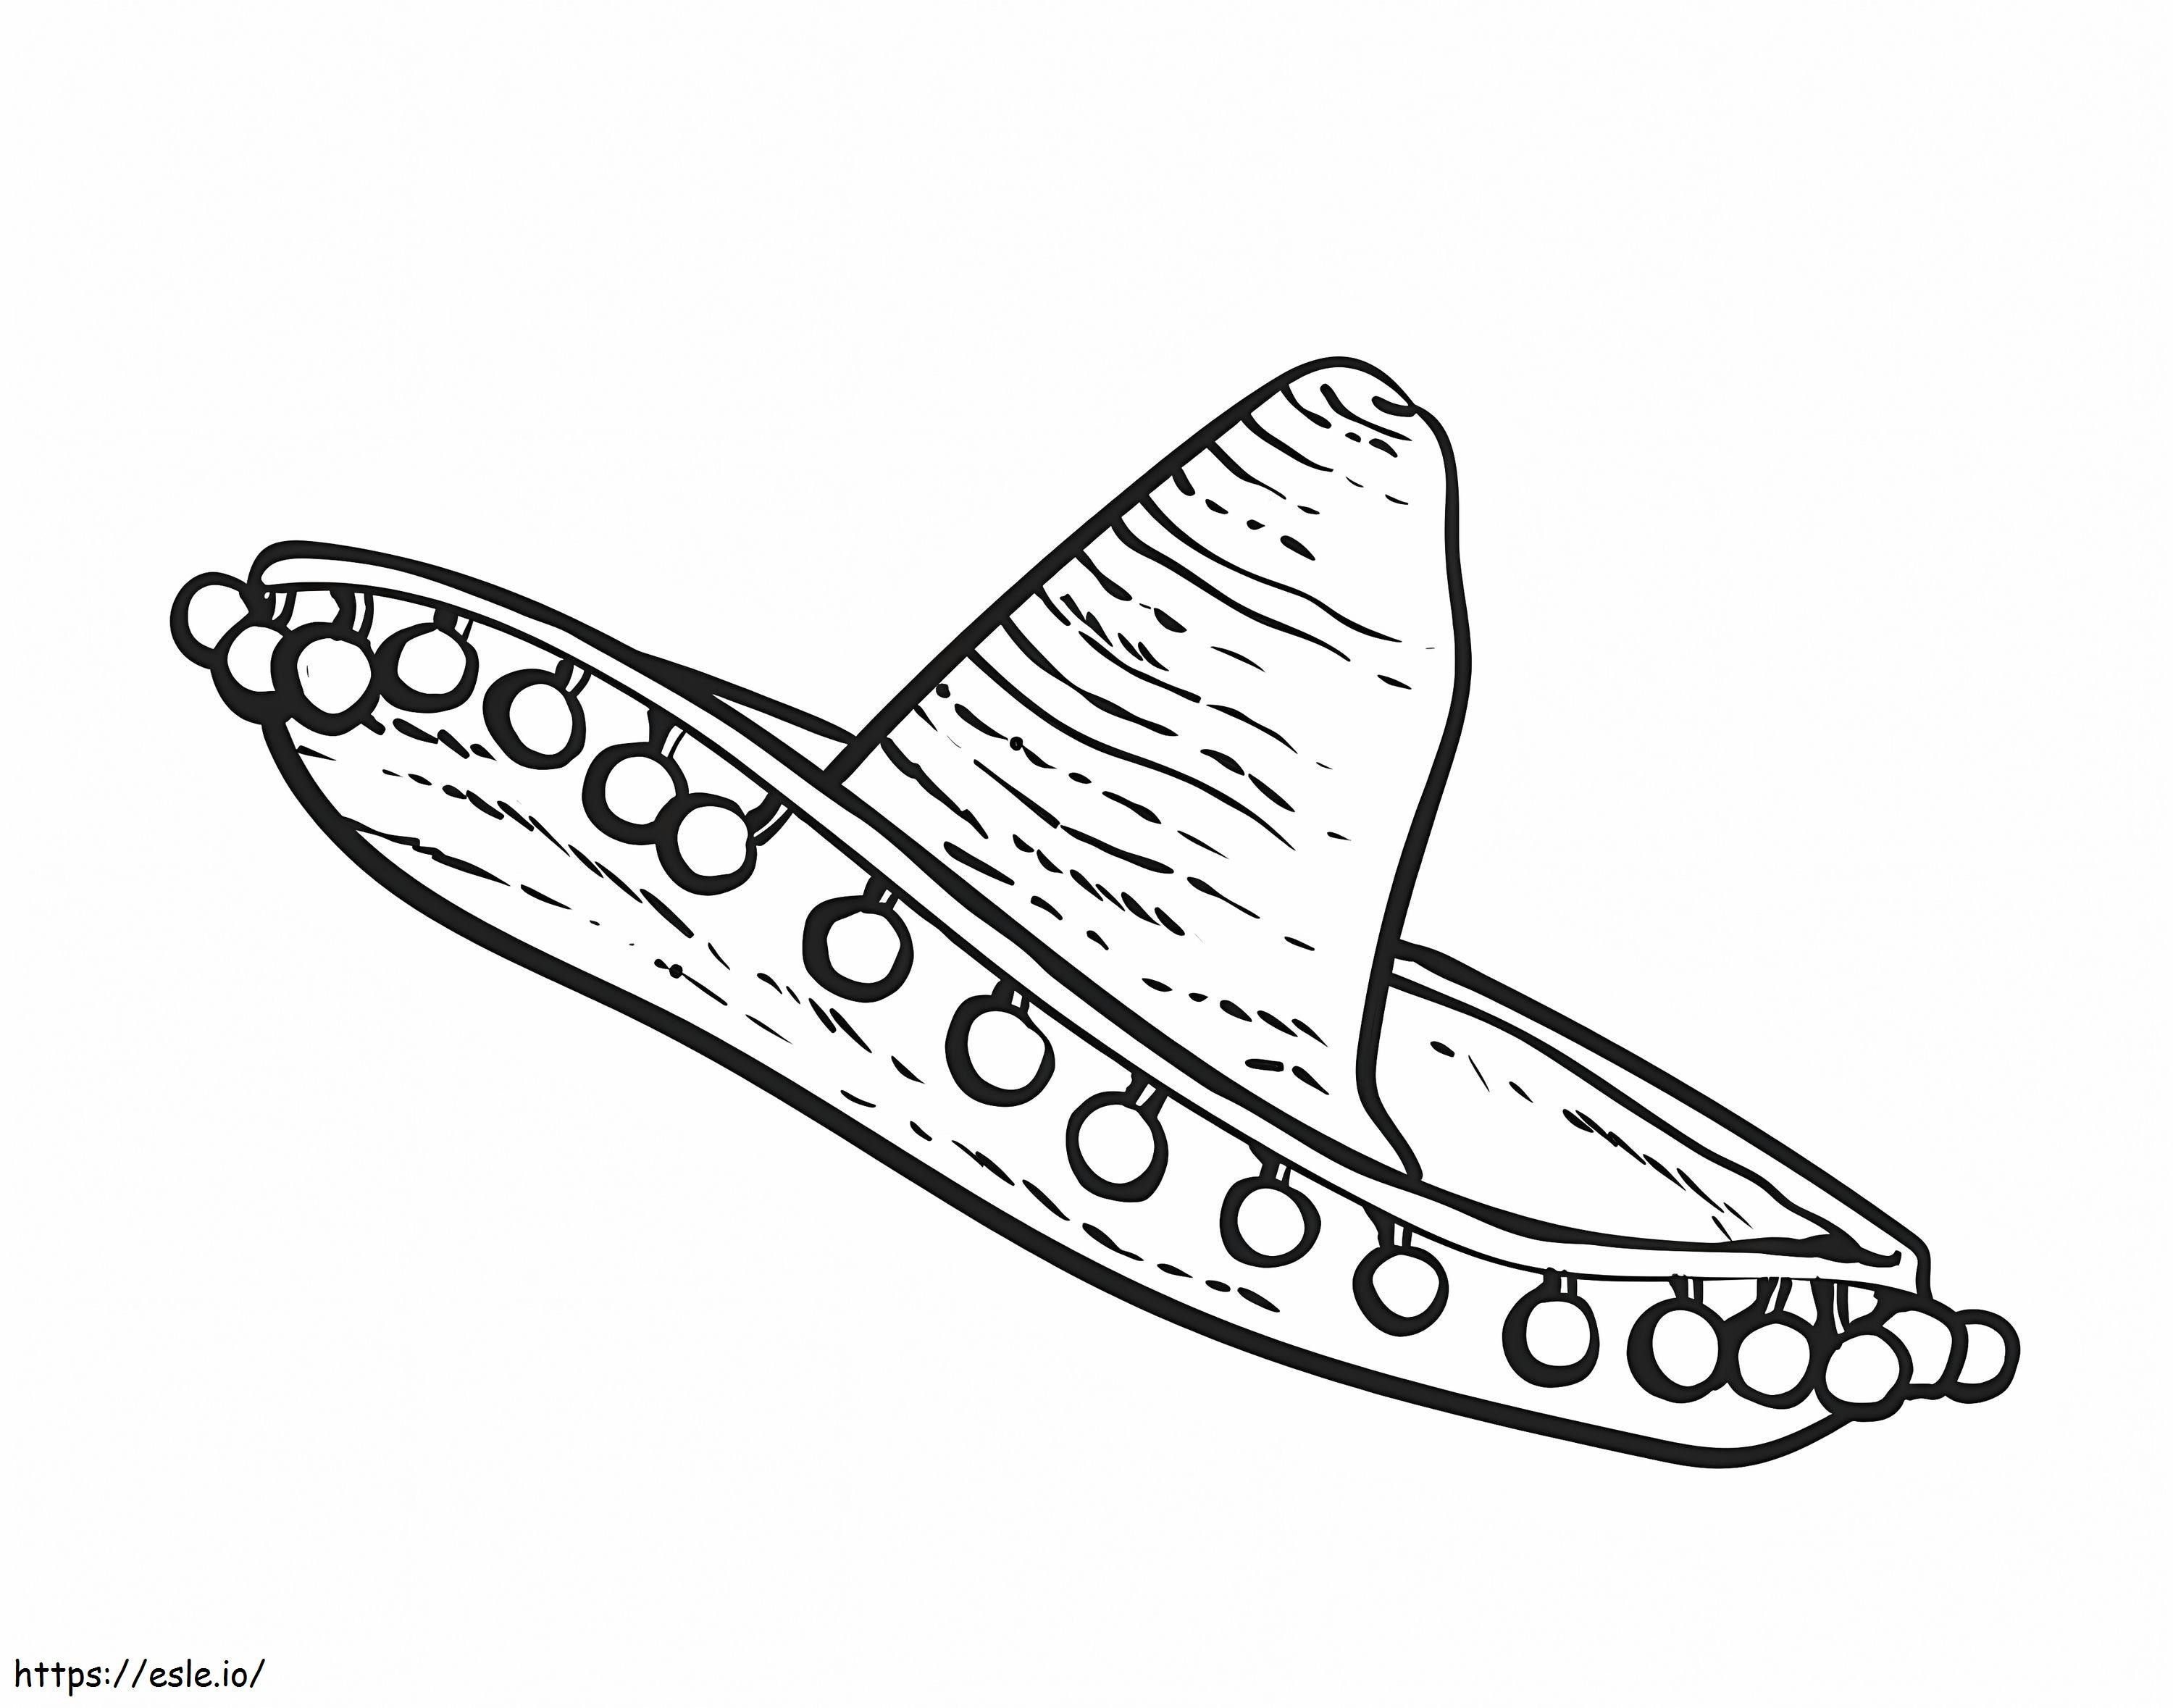 Meksykański kapelusz 1 kolorowanka